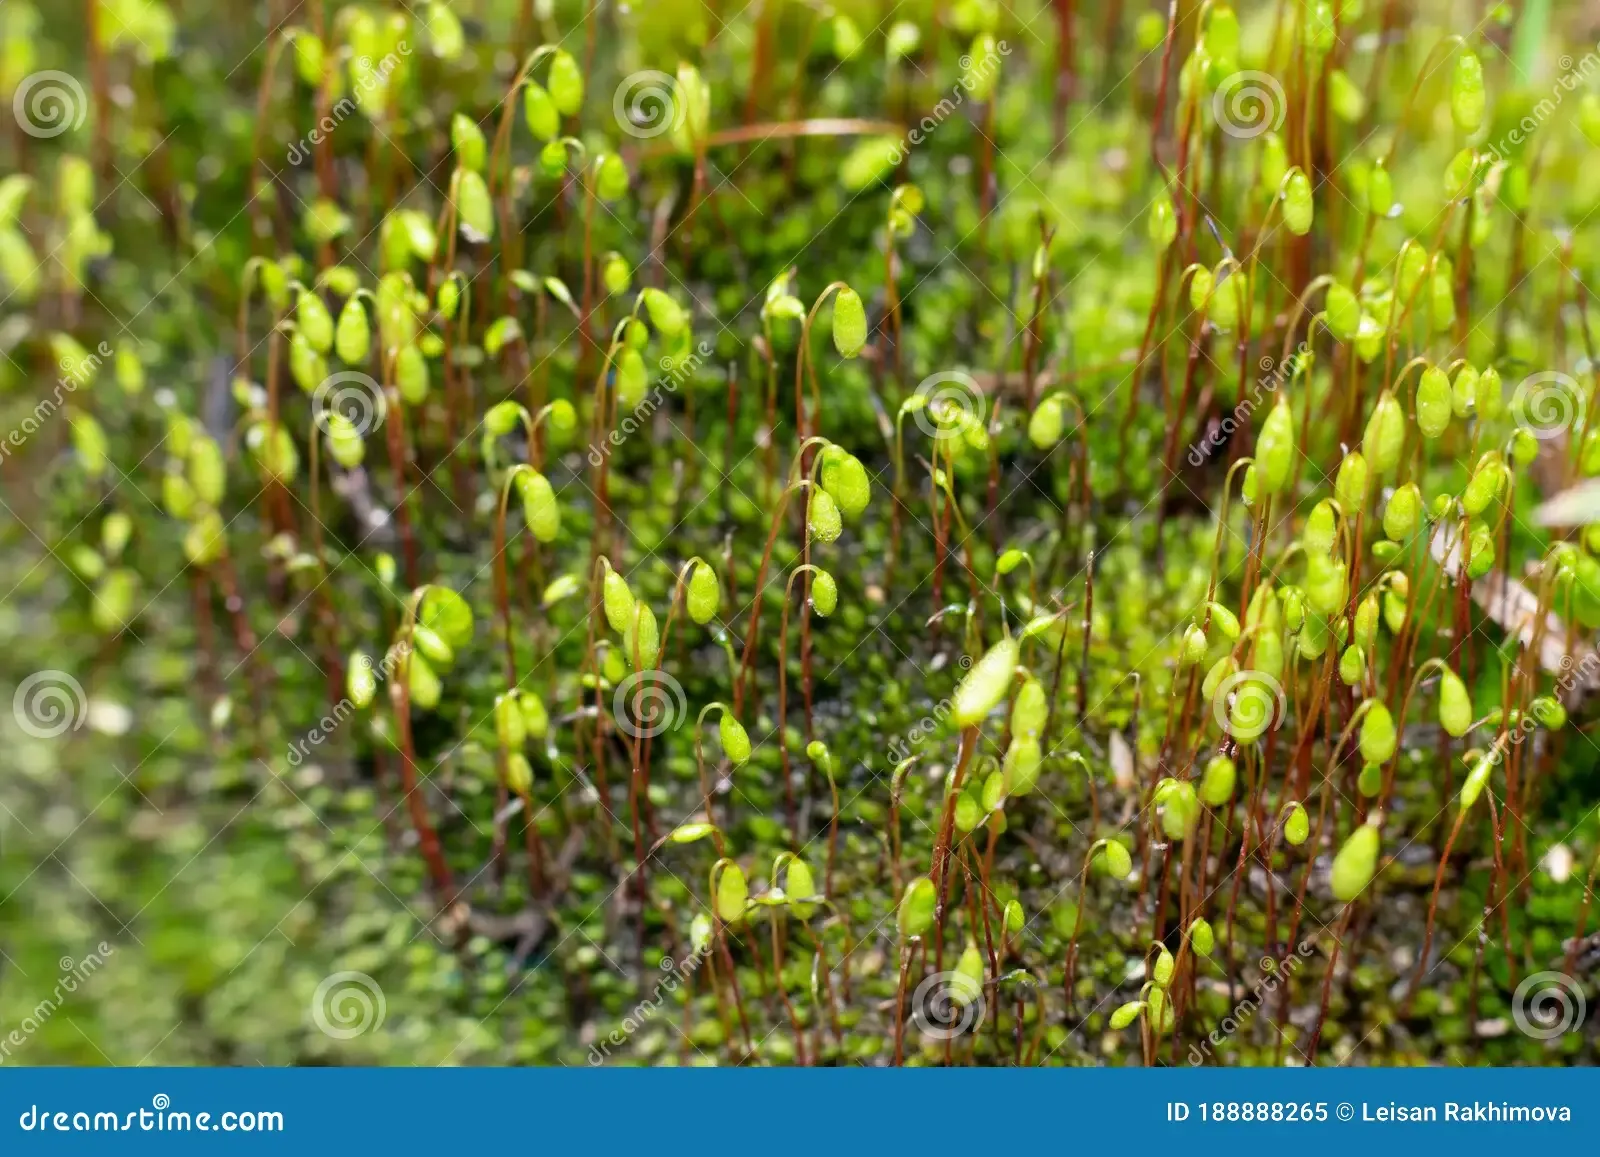 macro-bryum-moss-pohlia-nutans-green-spore-capsules-growing-ground-close-up-photo-bryophyte-188888265.jpg